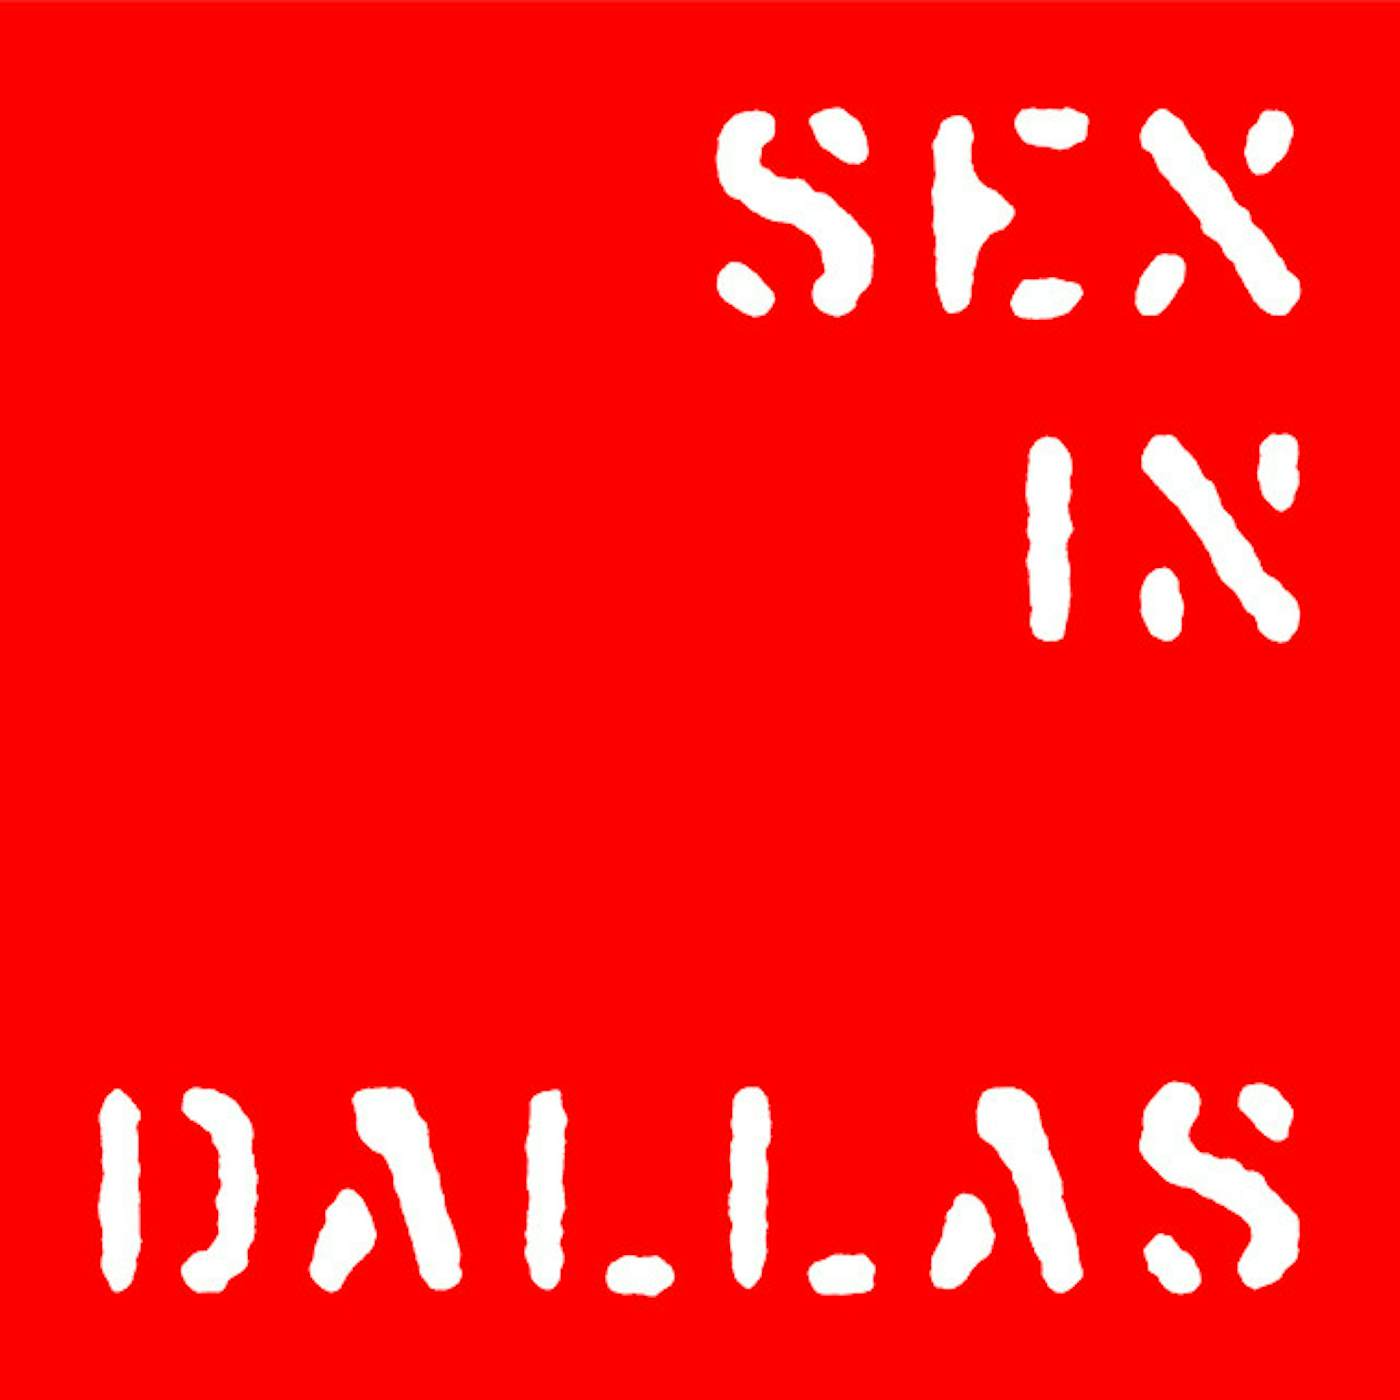 Sex In Dallas AROUND WAR Vinyl Record